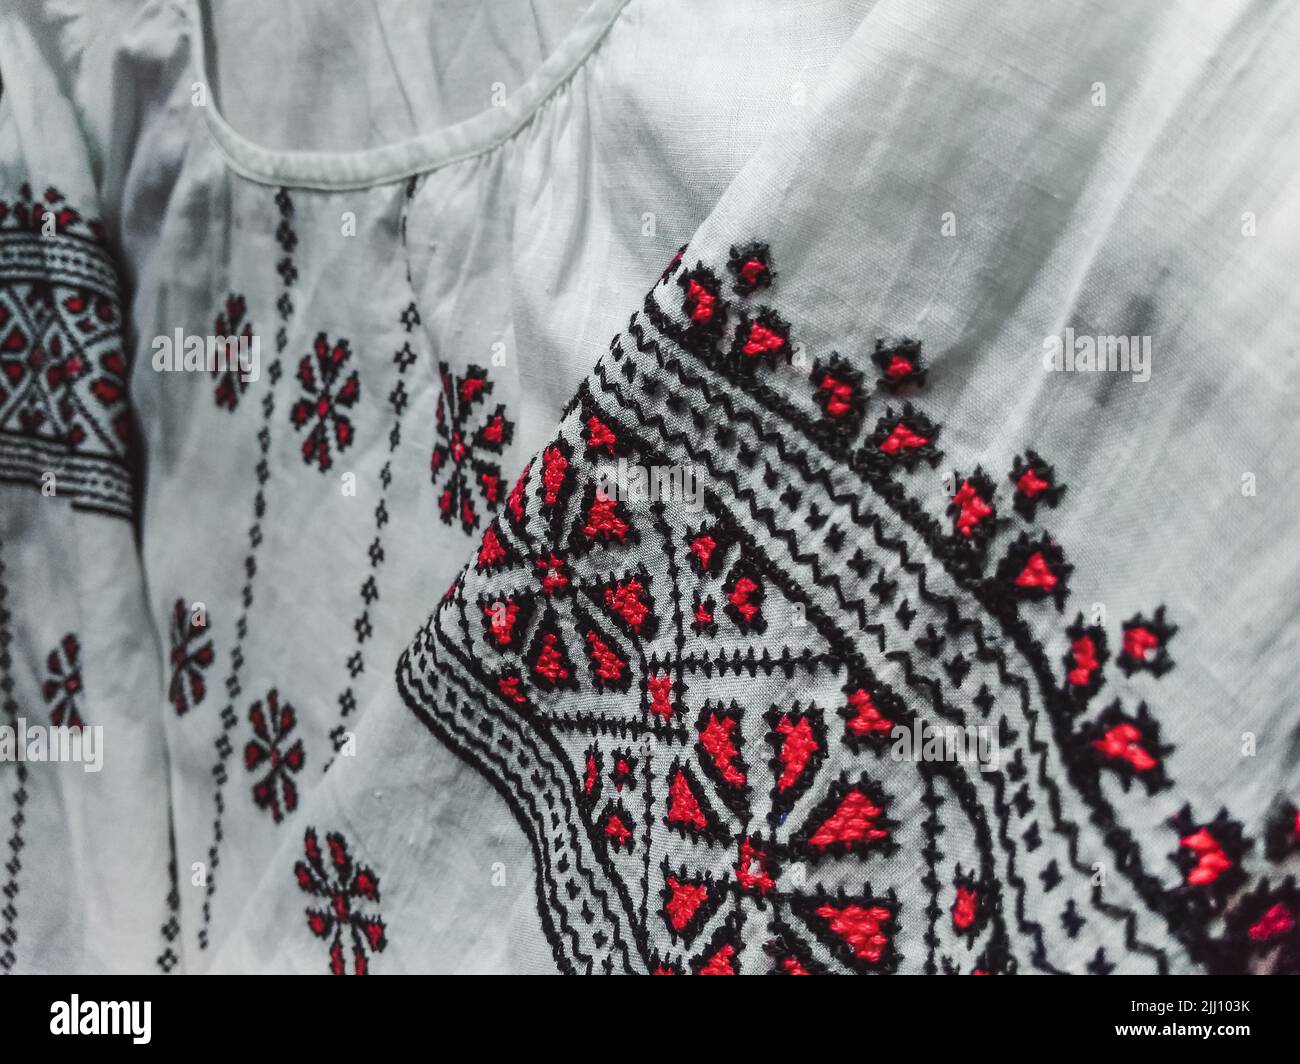 Ukrainian traditional women's embroidered shirt close-up Stock Photo